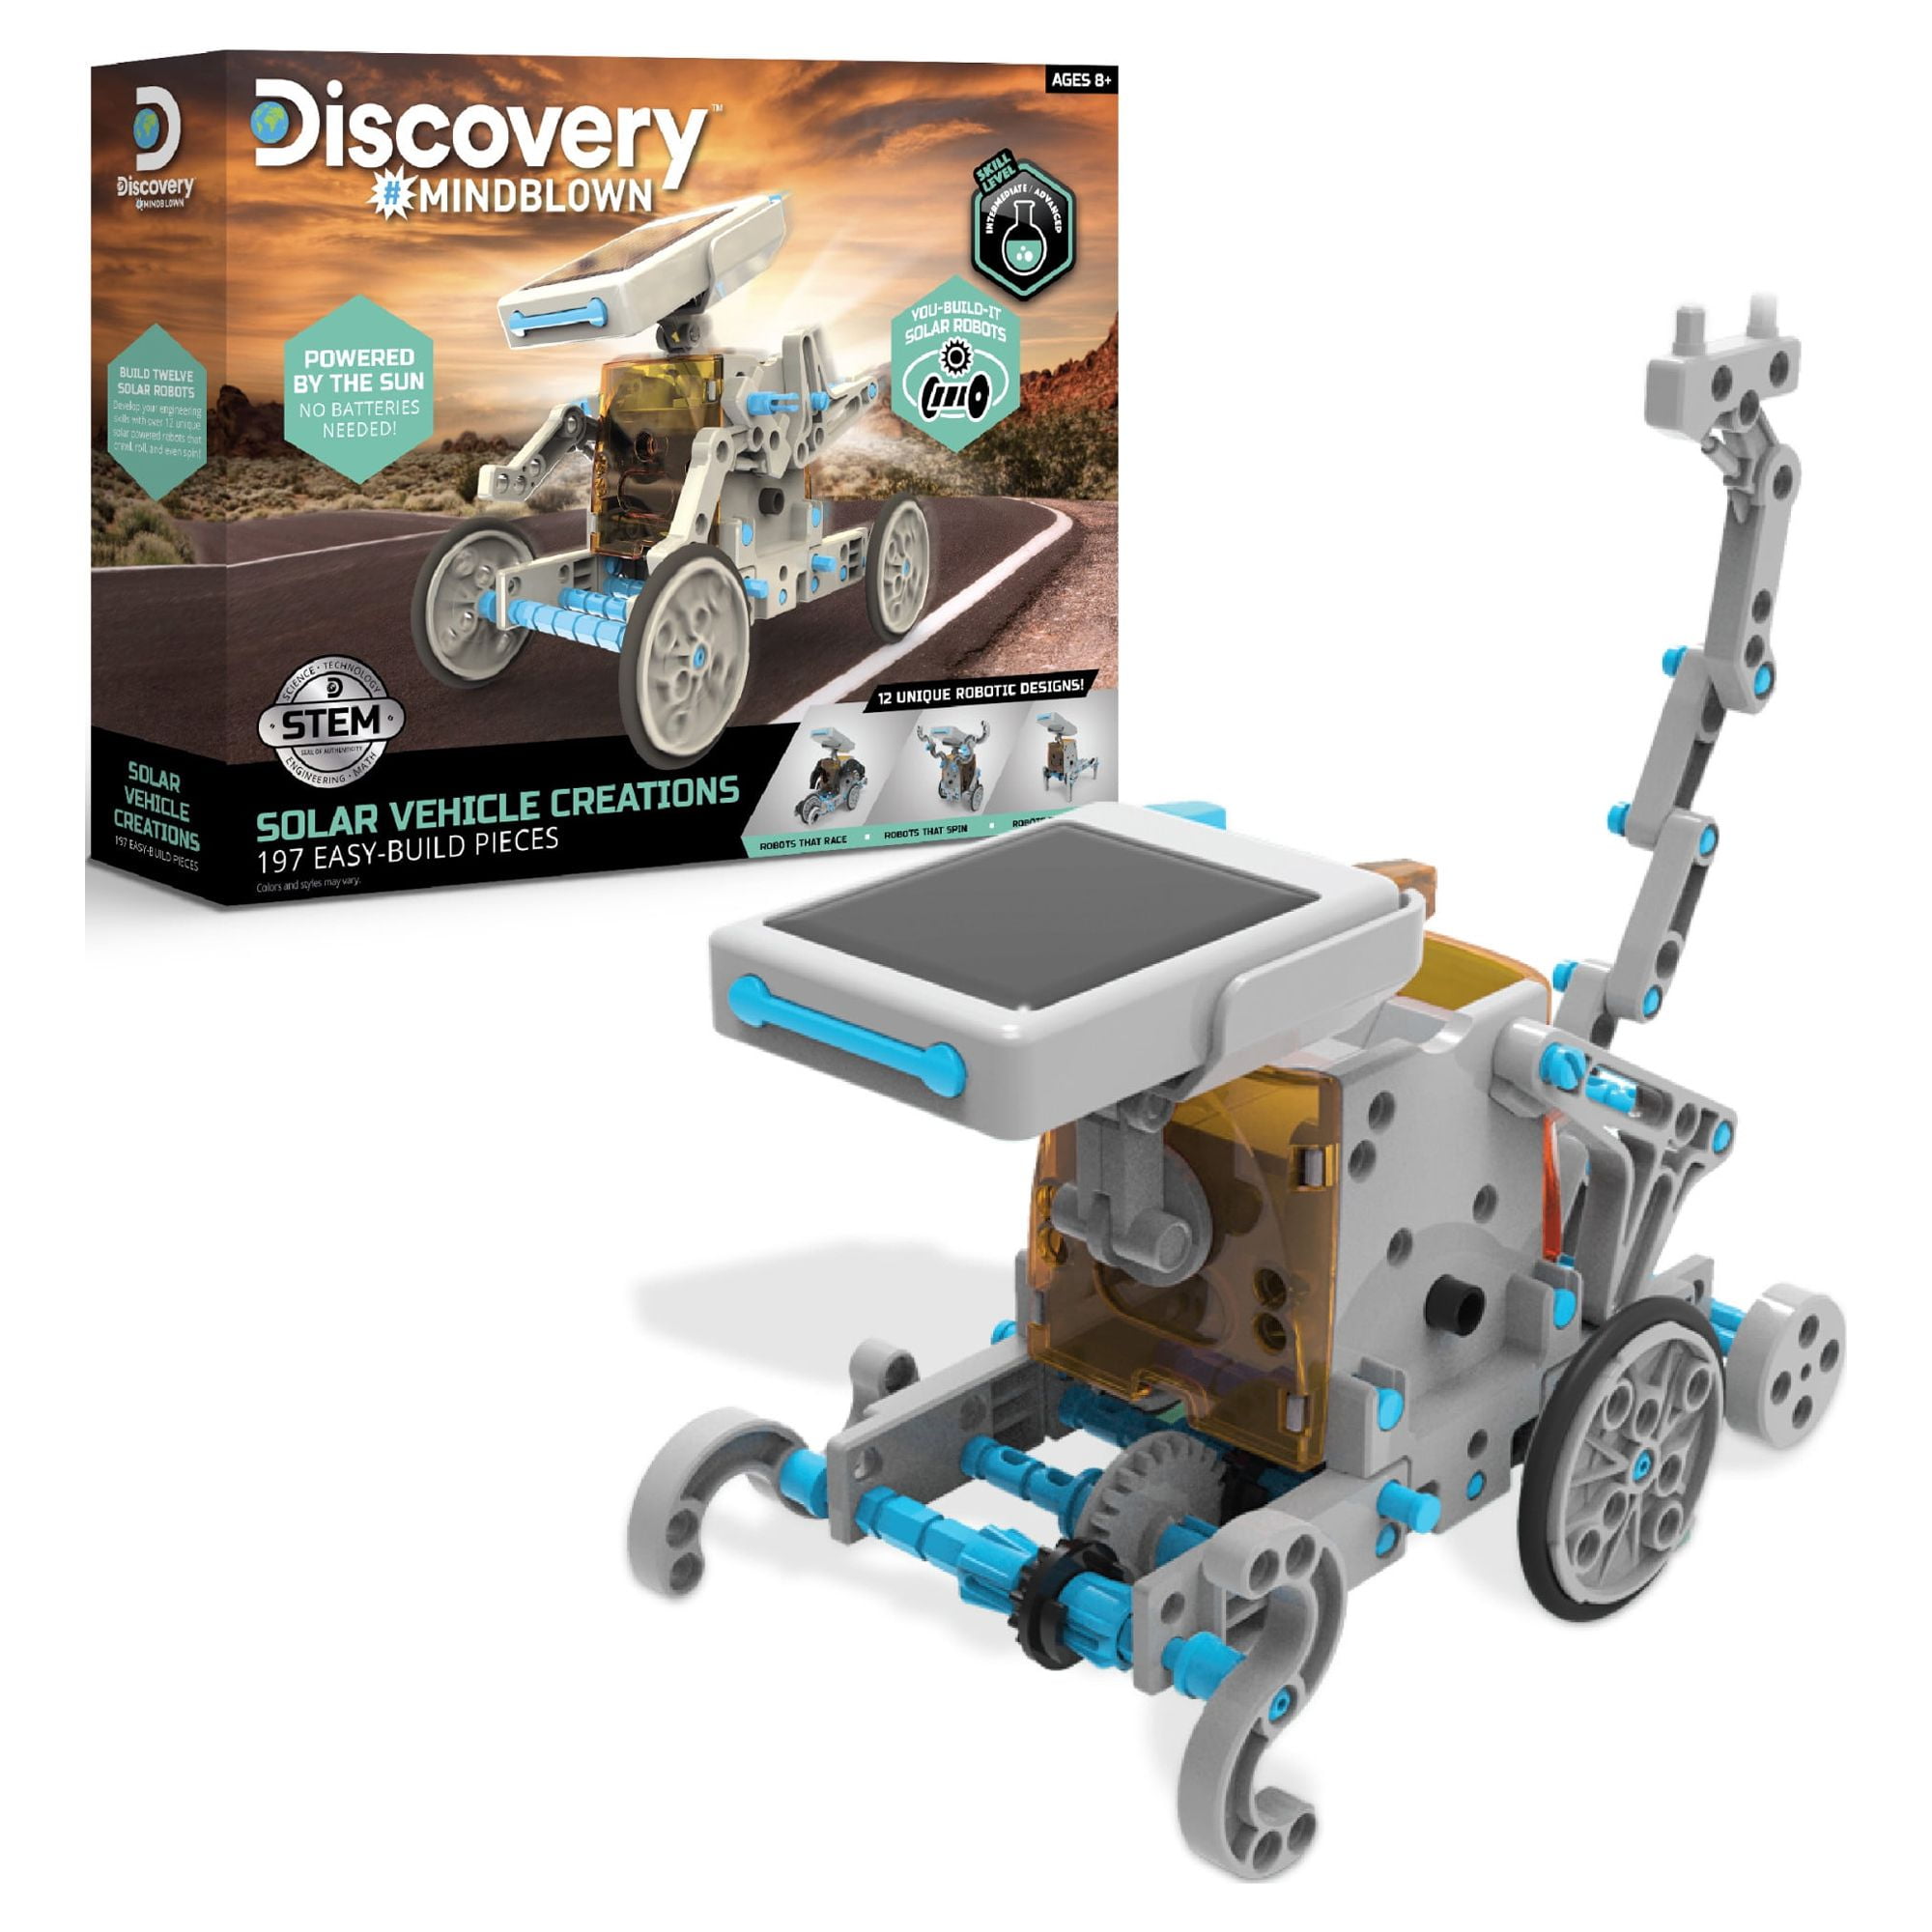 Discovery™ Crystal Aquarium Kit 